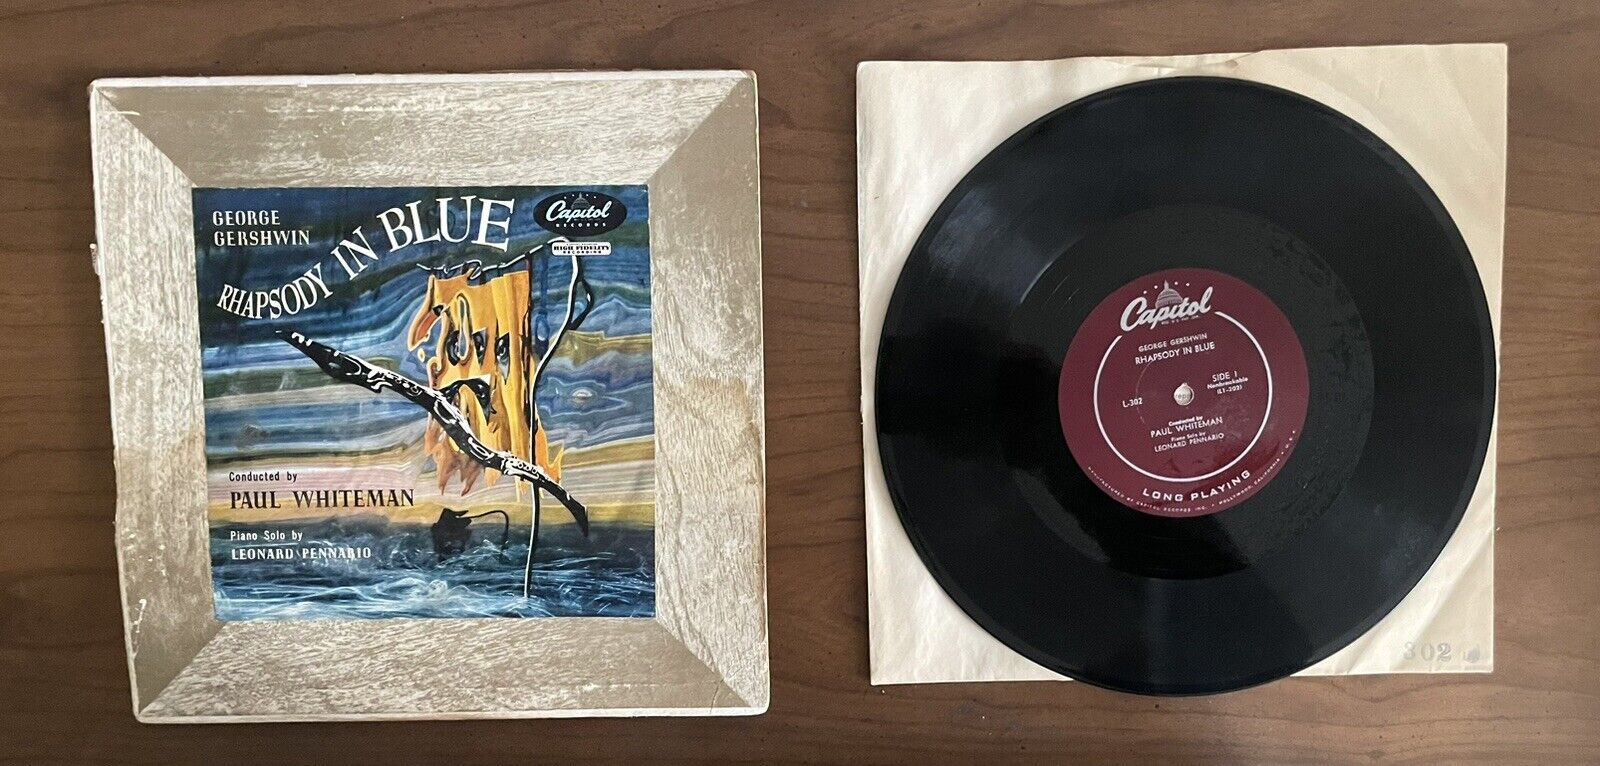 George Gershwin Rhapsody In Blue Conducted By Paul Whiteman 10” Rare Vintage LP